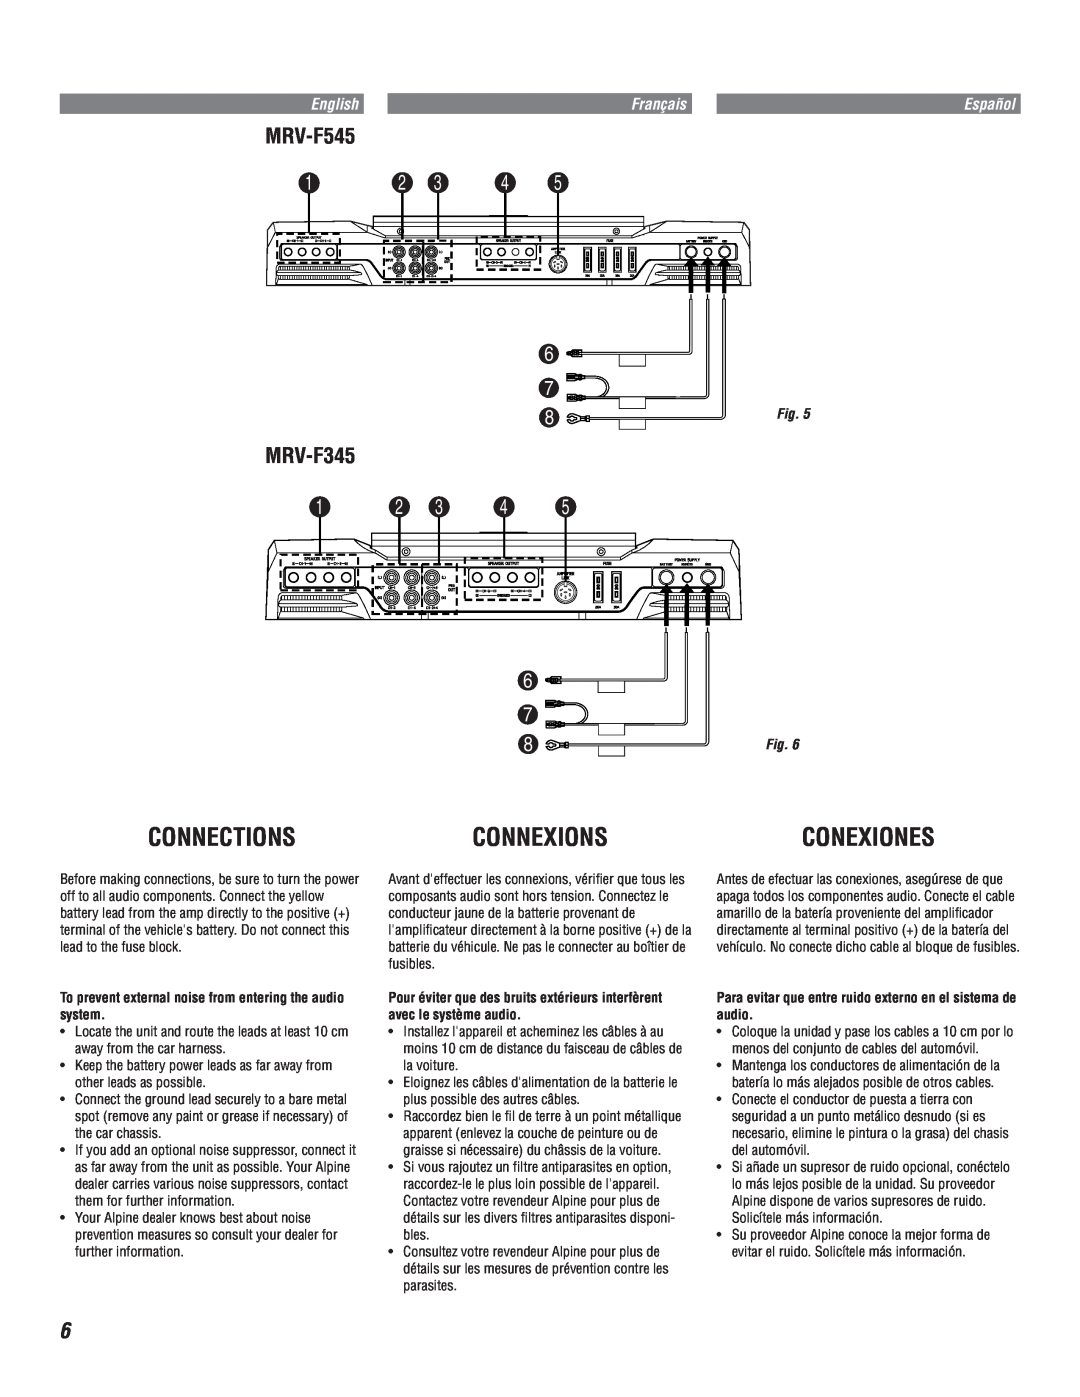 Alpine MRV-F345 owner manual Connections, Connexions, MRV-F545, Conexiones 